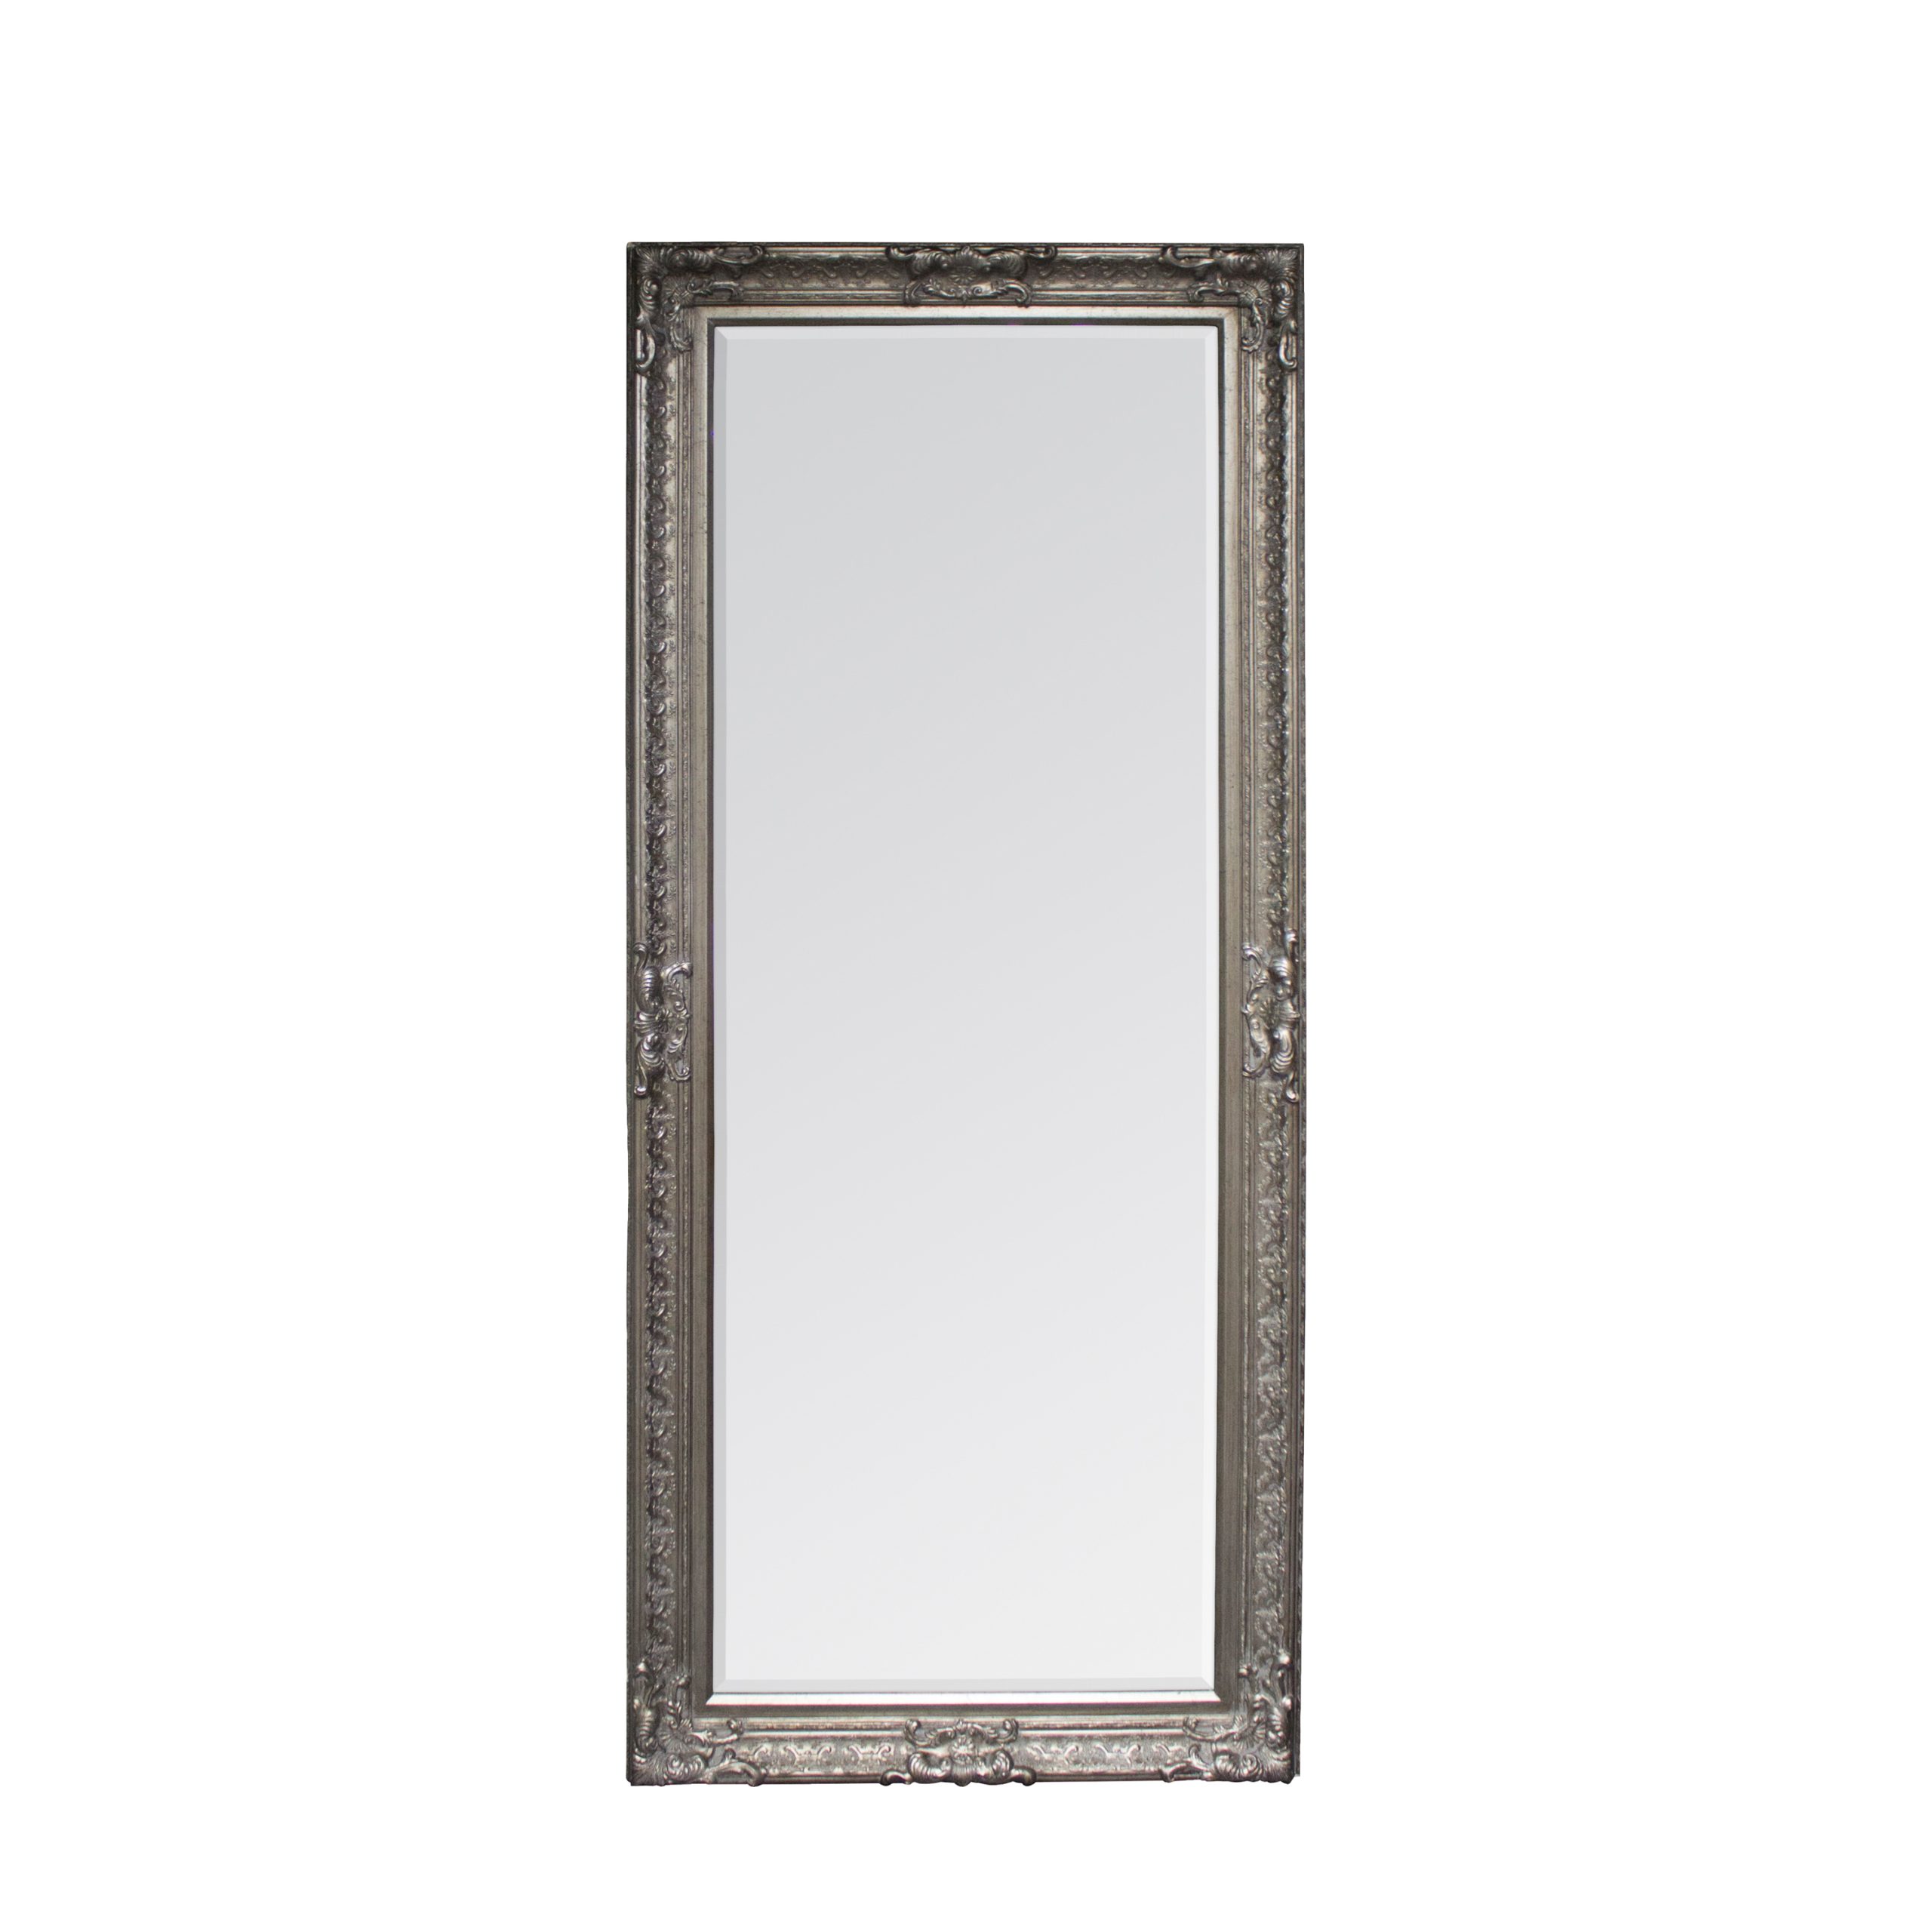 Gallery Direct Pembridge Mirror Antique Silver | Shackletons